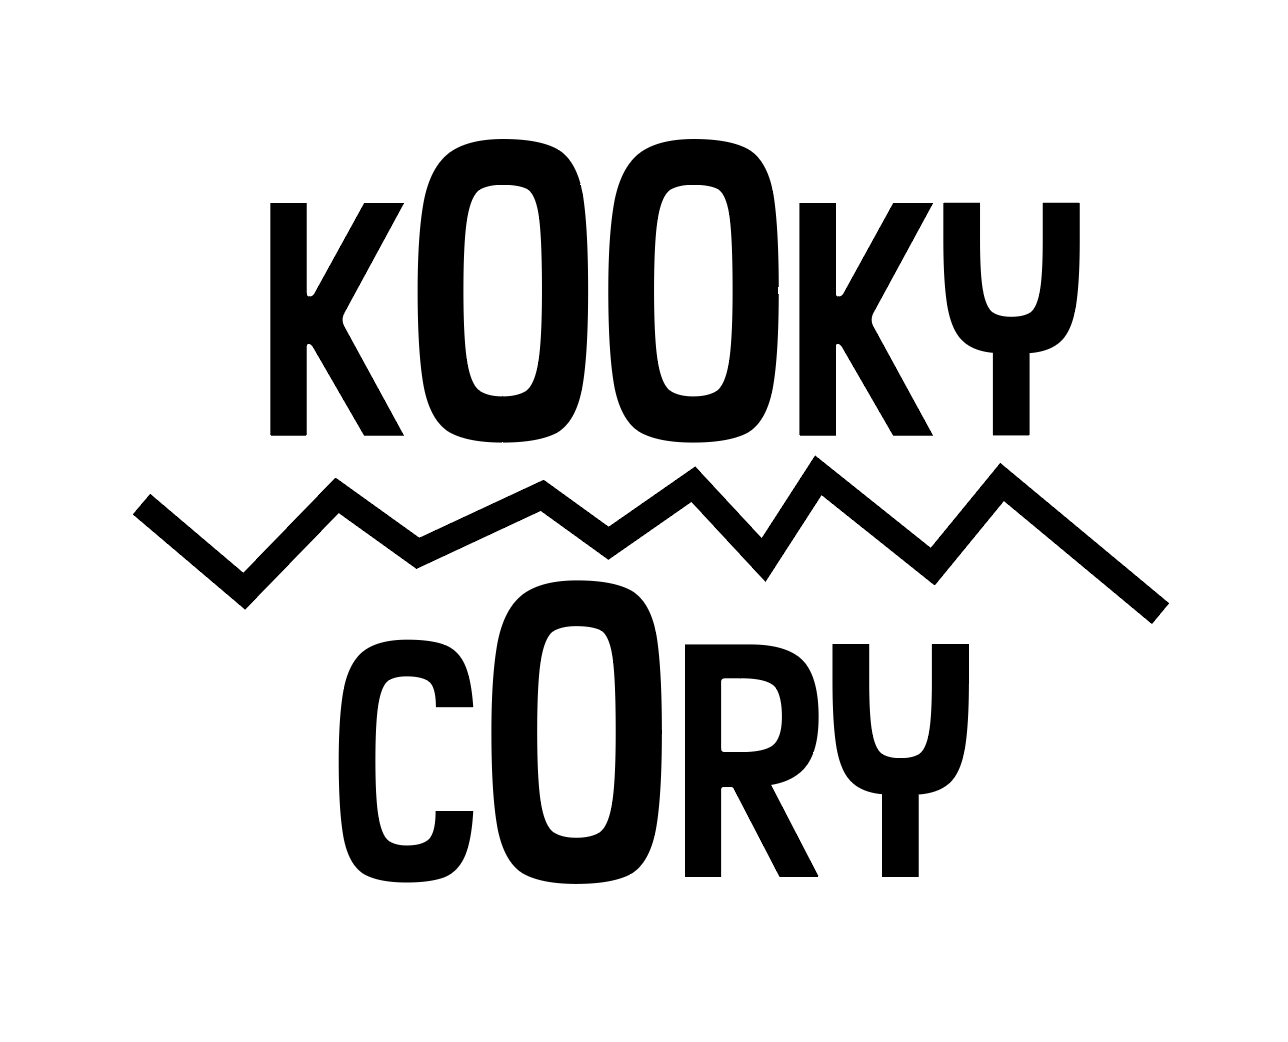 kOOky cOry